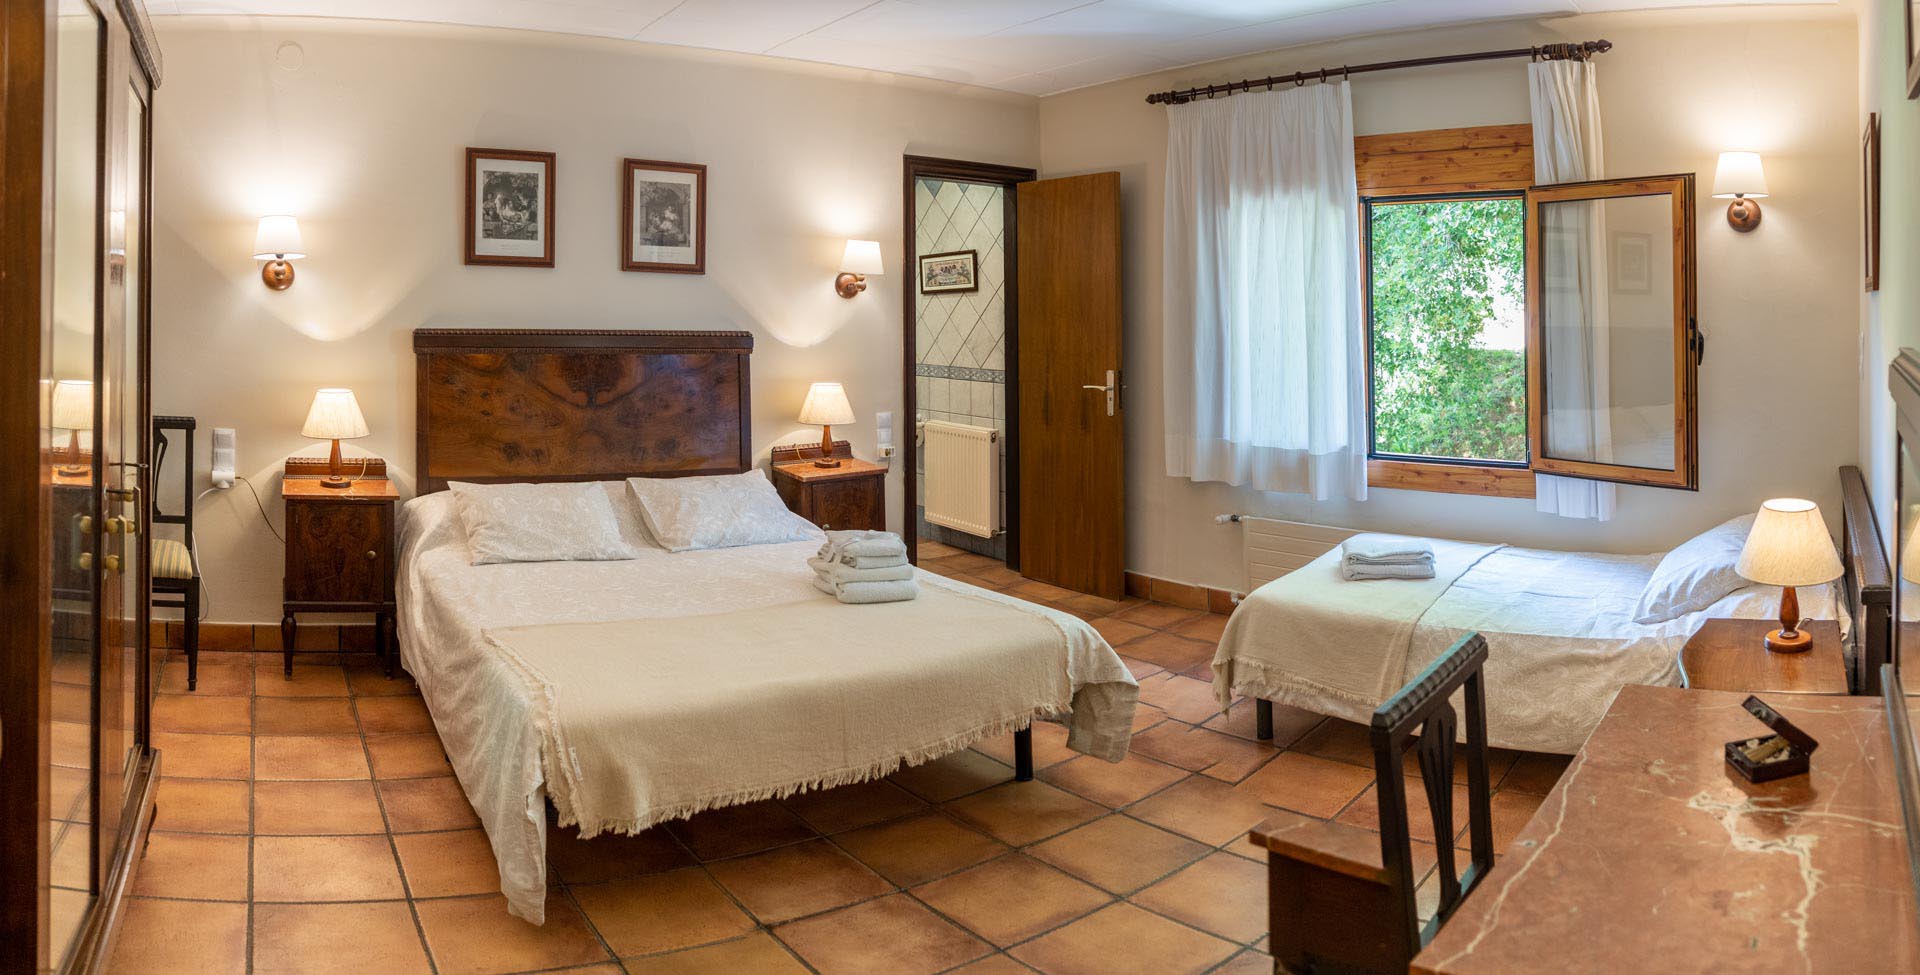 Room «la guineu» of Can Rosich, rural tourism house in Santa Susanna, Barcelona